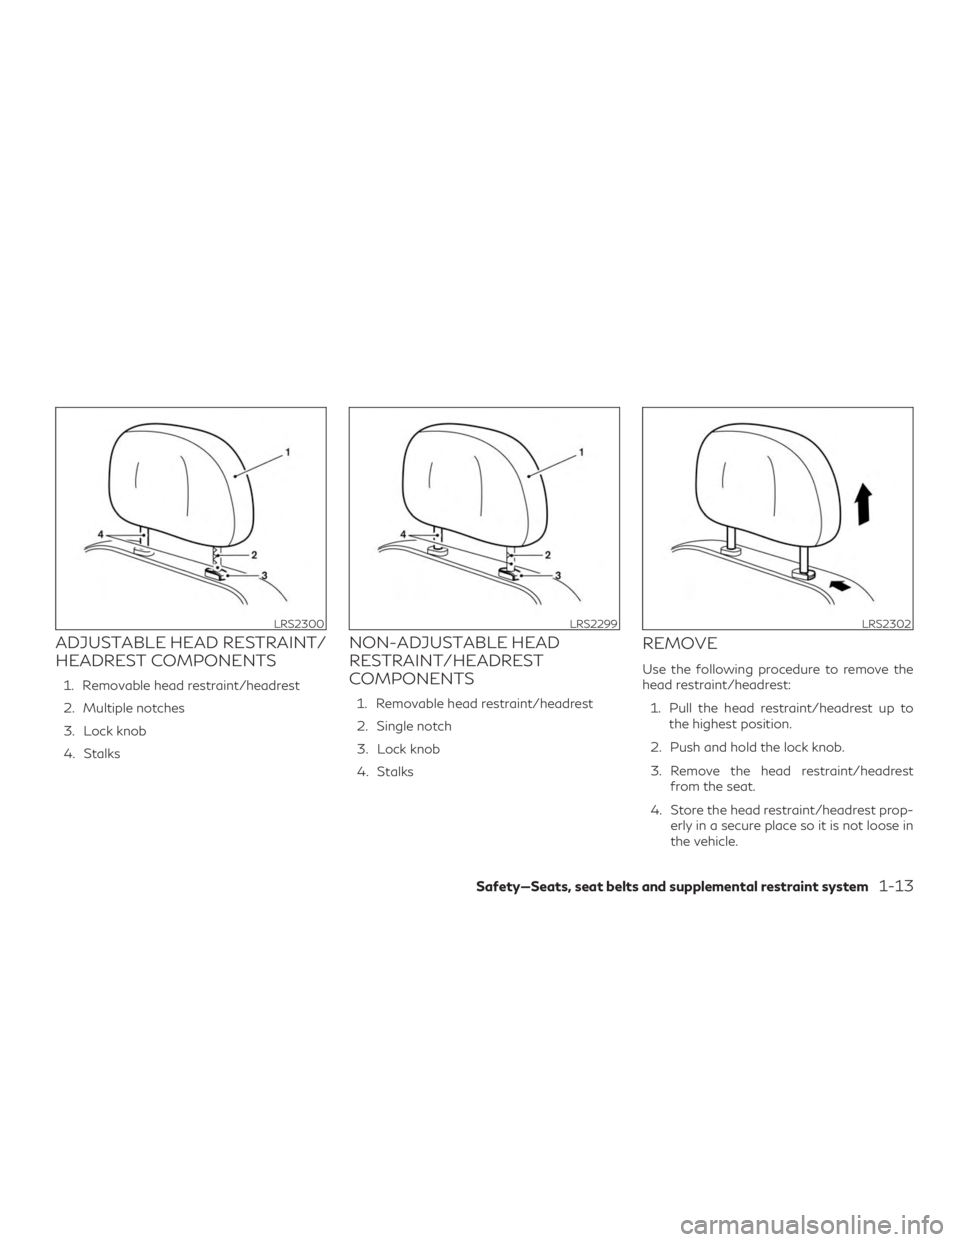 INFINITI QX60 2018  Owners Manual ADJUSTABLE HEAD RESTRAINT/
HEADREST COMPONENTS
1. Removable head restraint/headrest
2. Multiple notches
3. Lock knob
4. Stalks
NON-ADJUSTABLE HEAD
RESTRAINT/HEADREST
COMPONENTS
1. Removable head restr